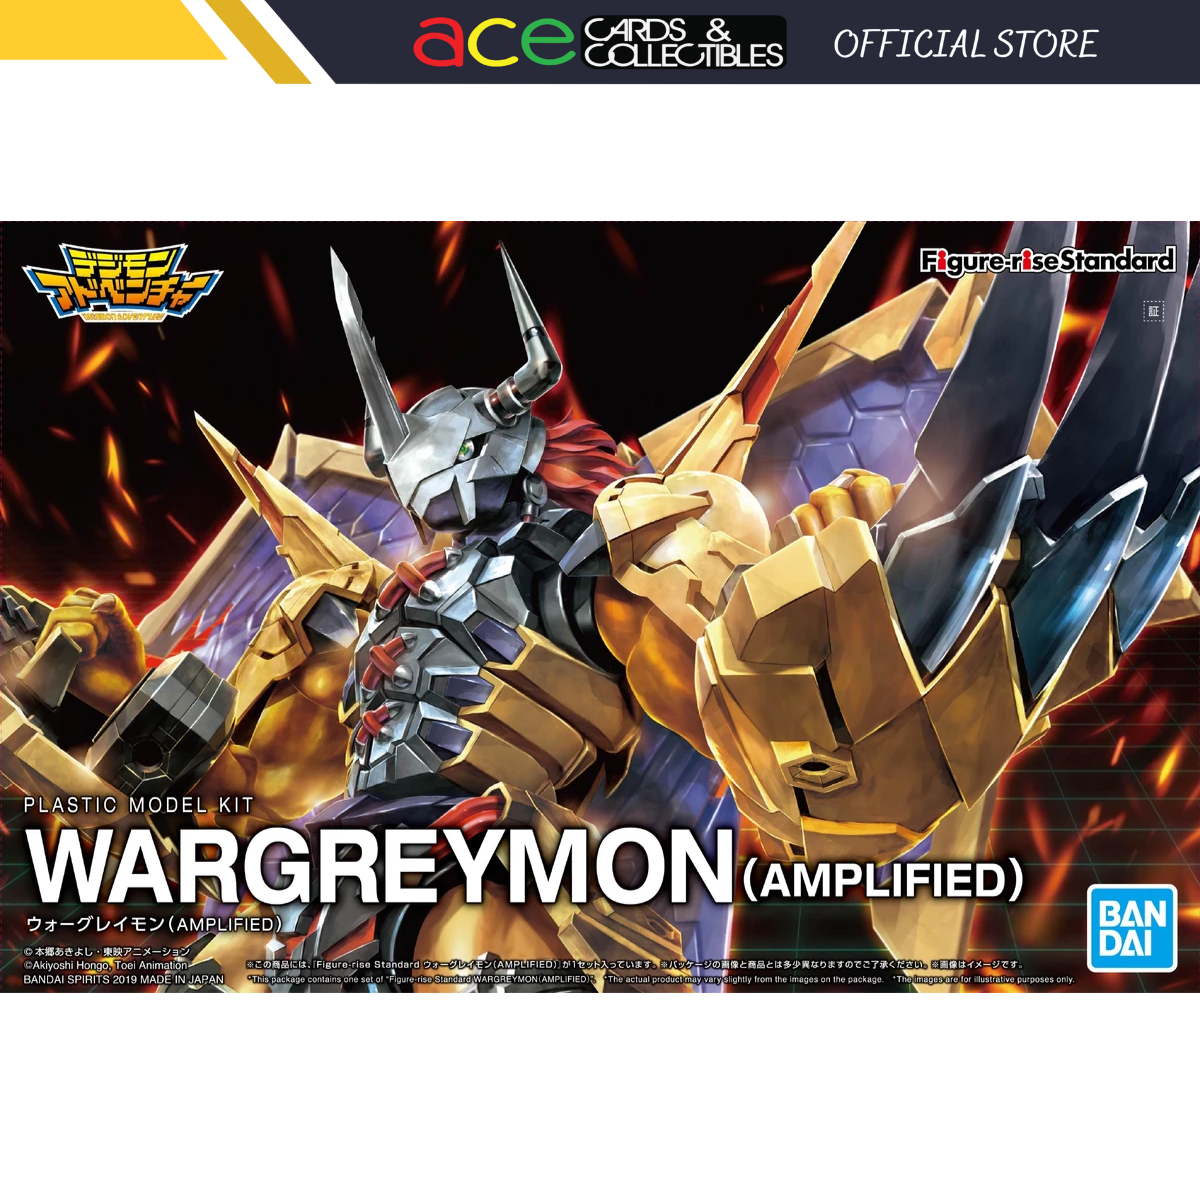 Digimon Figure-rise Standard Wargreymon (Amplified)-Bandai-Ace Cards & Collectibles